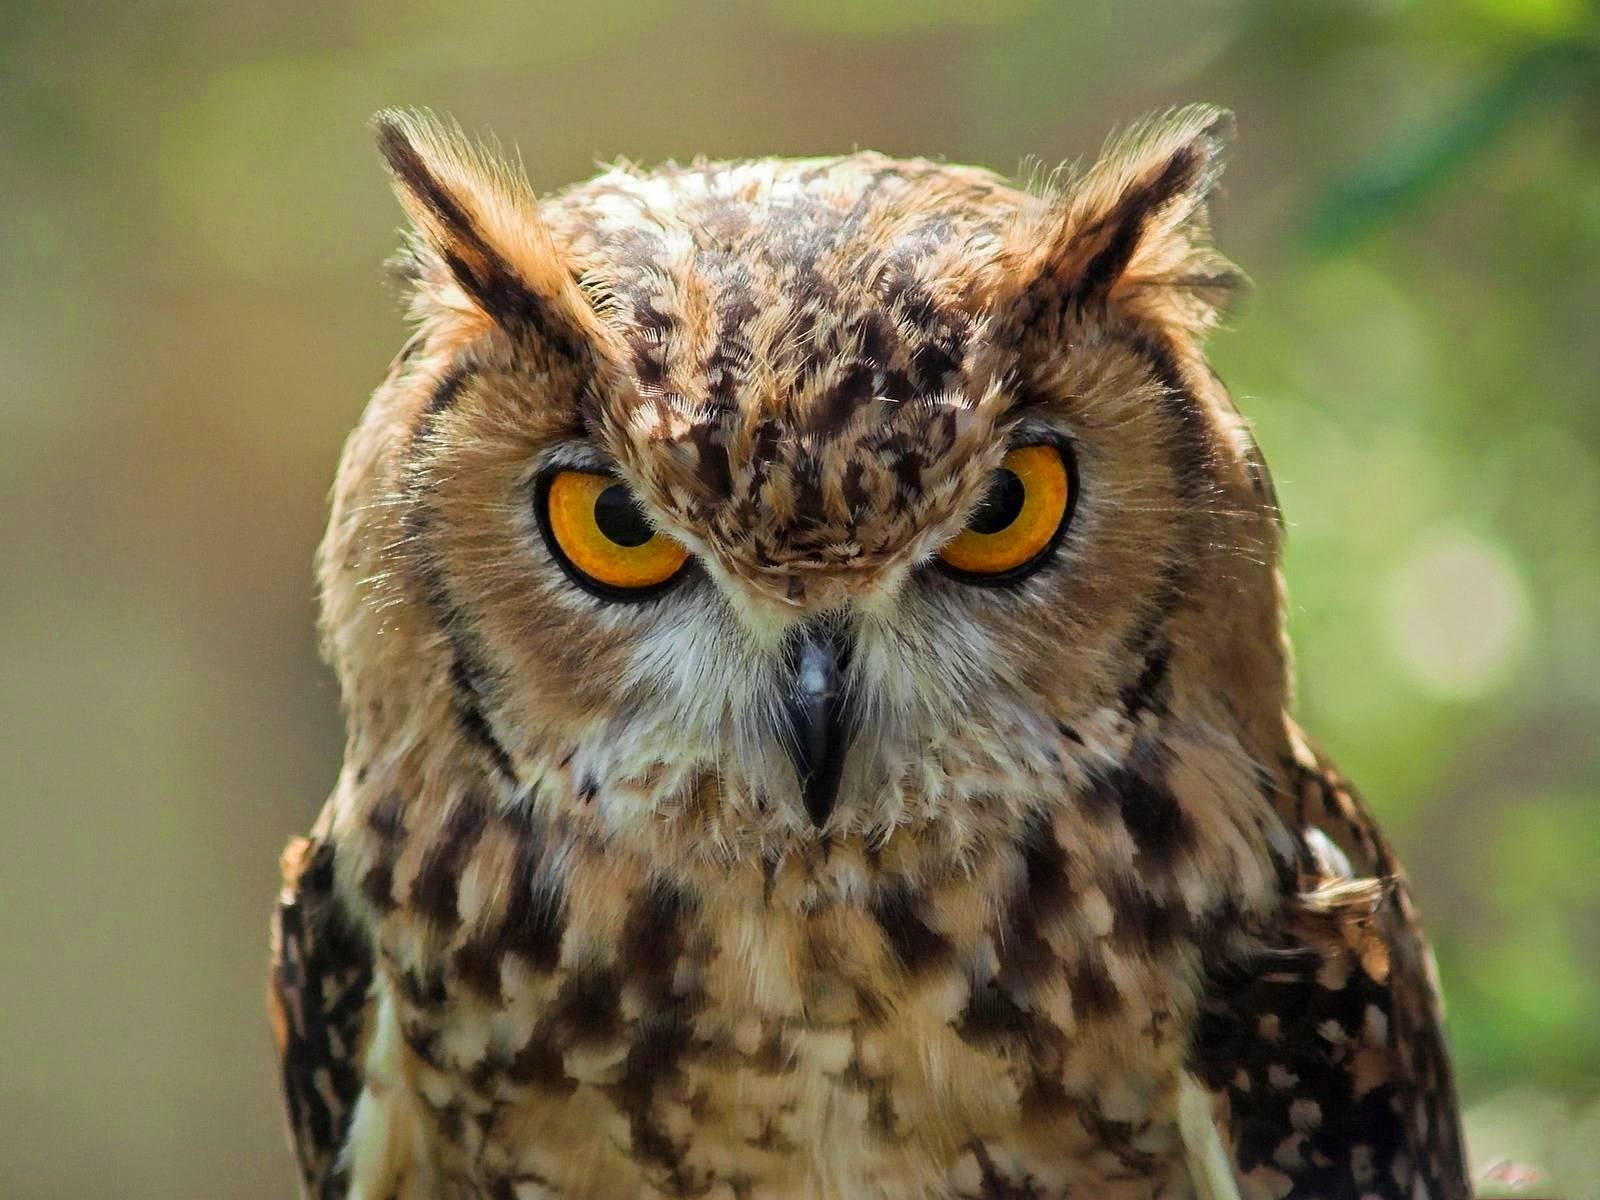  ANIMALS  PICTURE GAMBAR  BURUNG HANTU Owl Bird Pictures 5